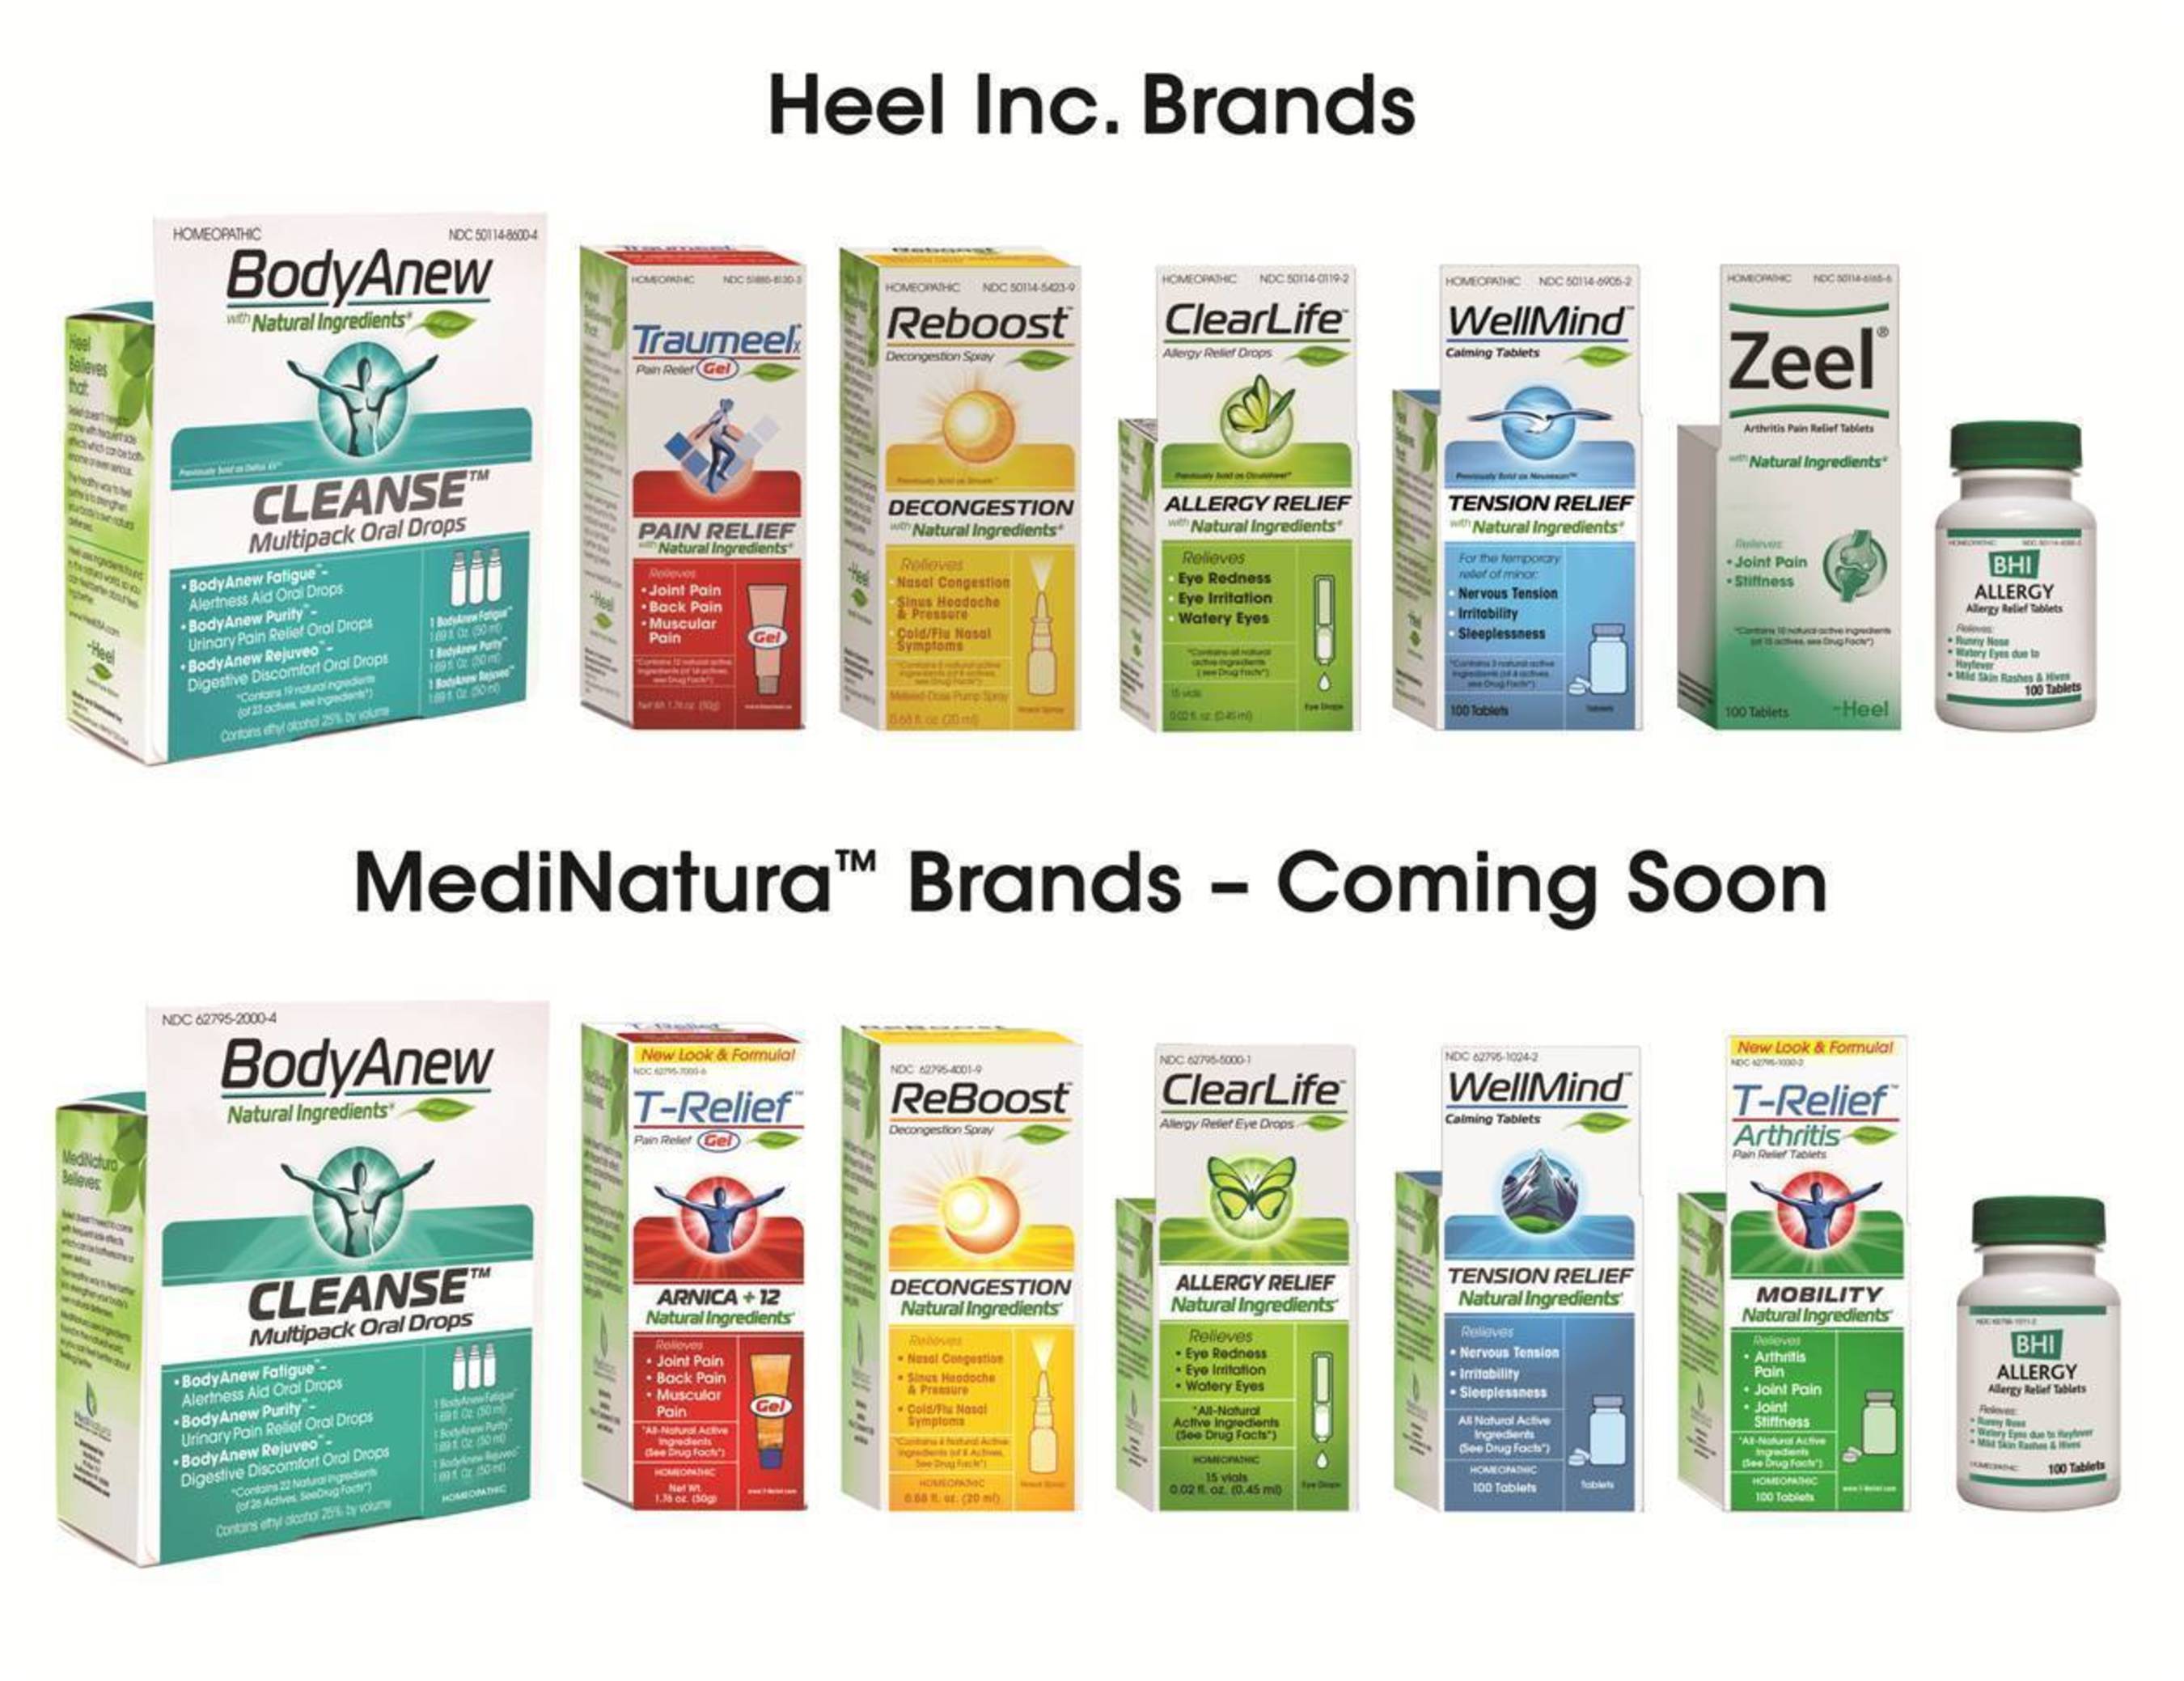 Comparison of Heel Inc. Brands and MediNatura Brands (Coming Soon) (PRNewsFoto/MediNatura Inc.)